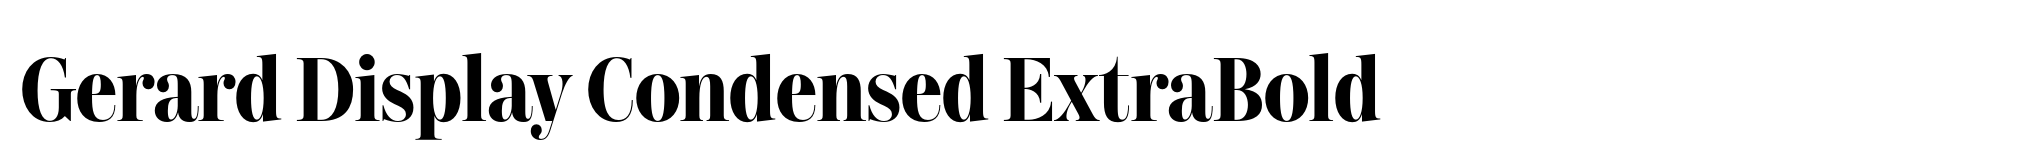 Gerard Display Condensed ExtraBold image